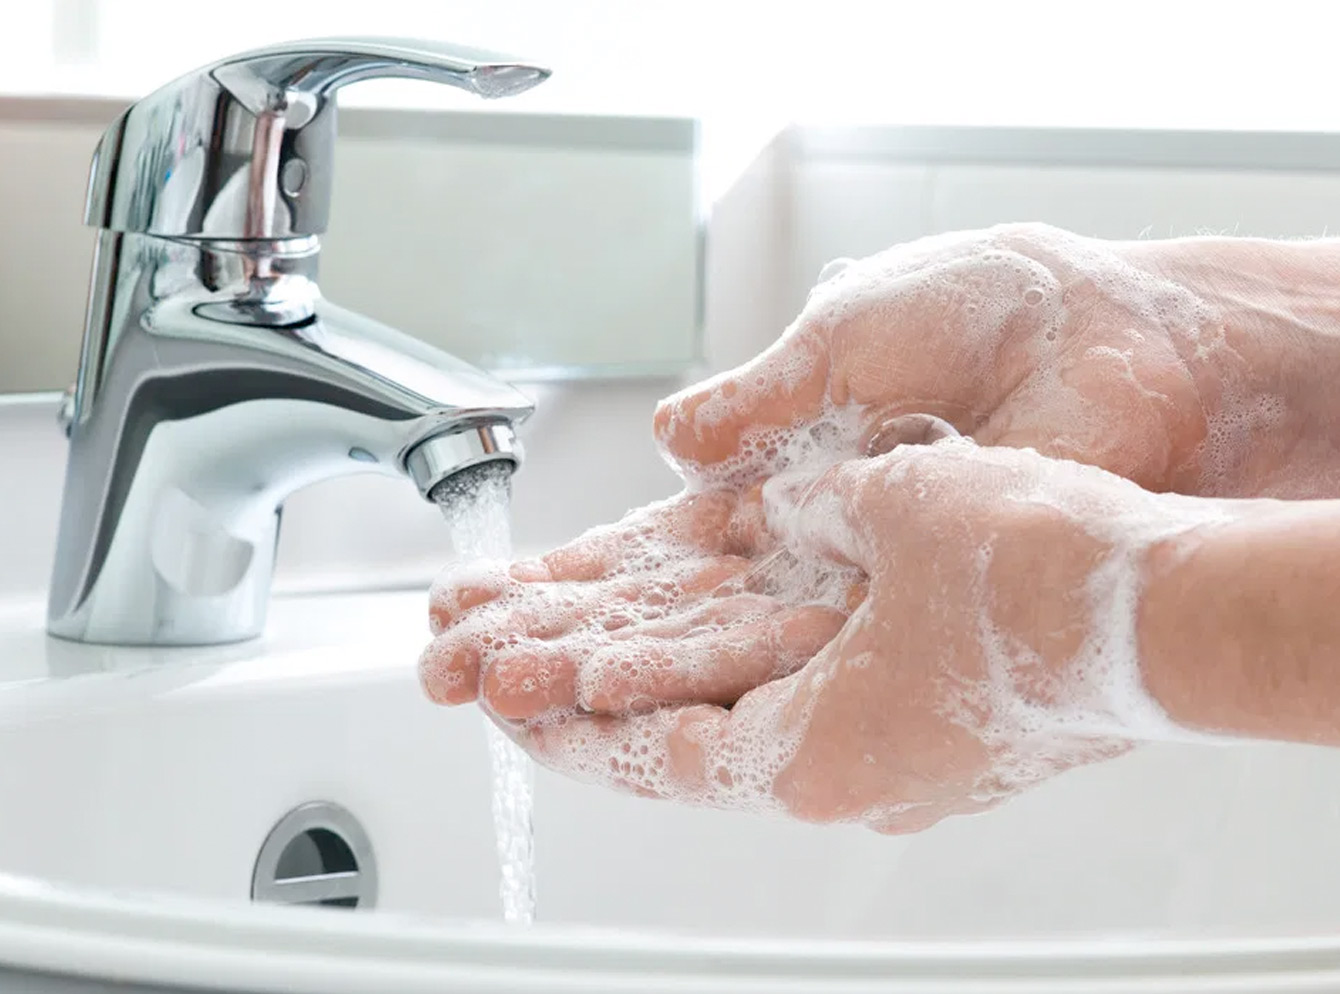 limpieza de manos con jabon antes de mascarilla iberomask